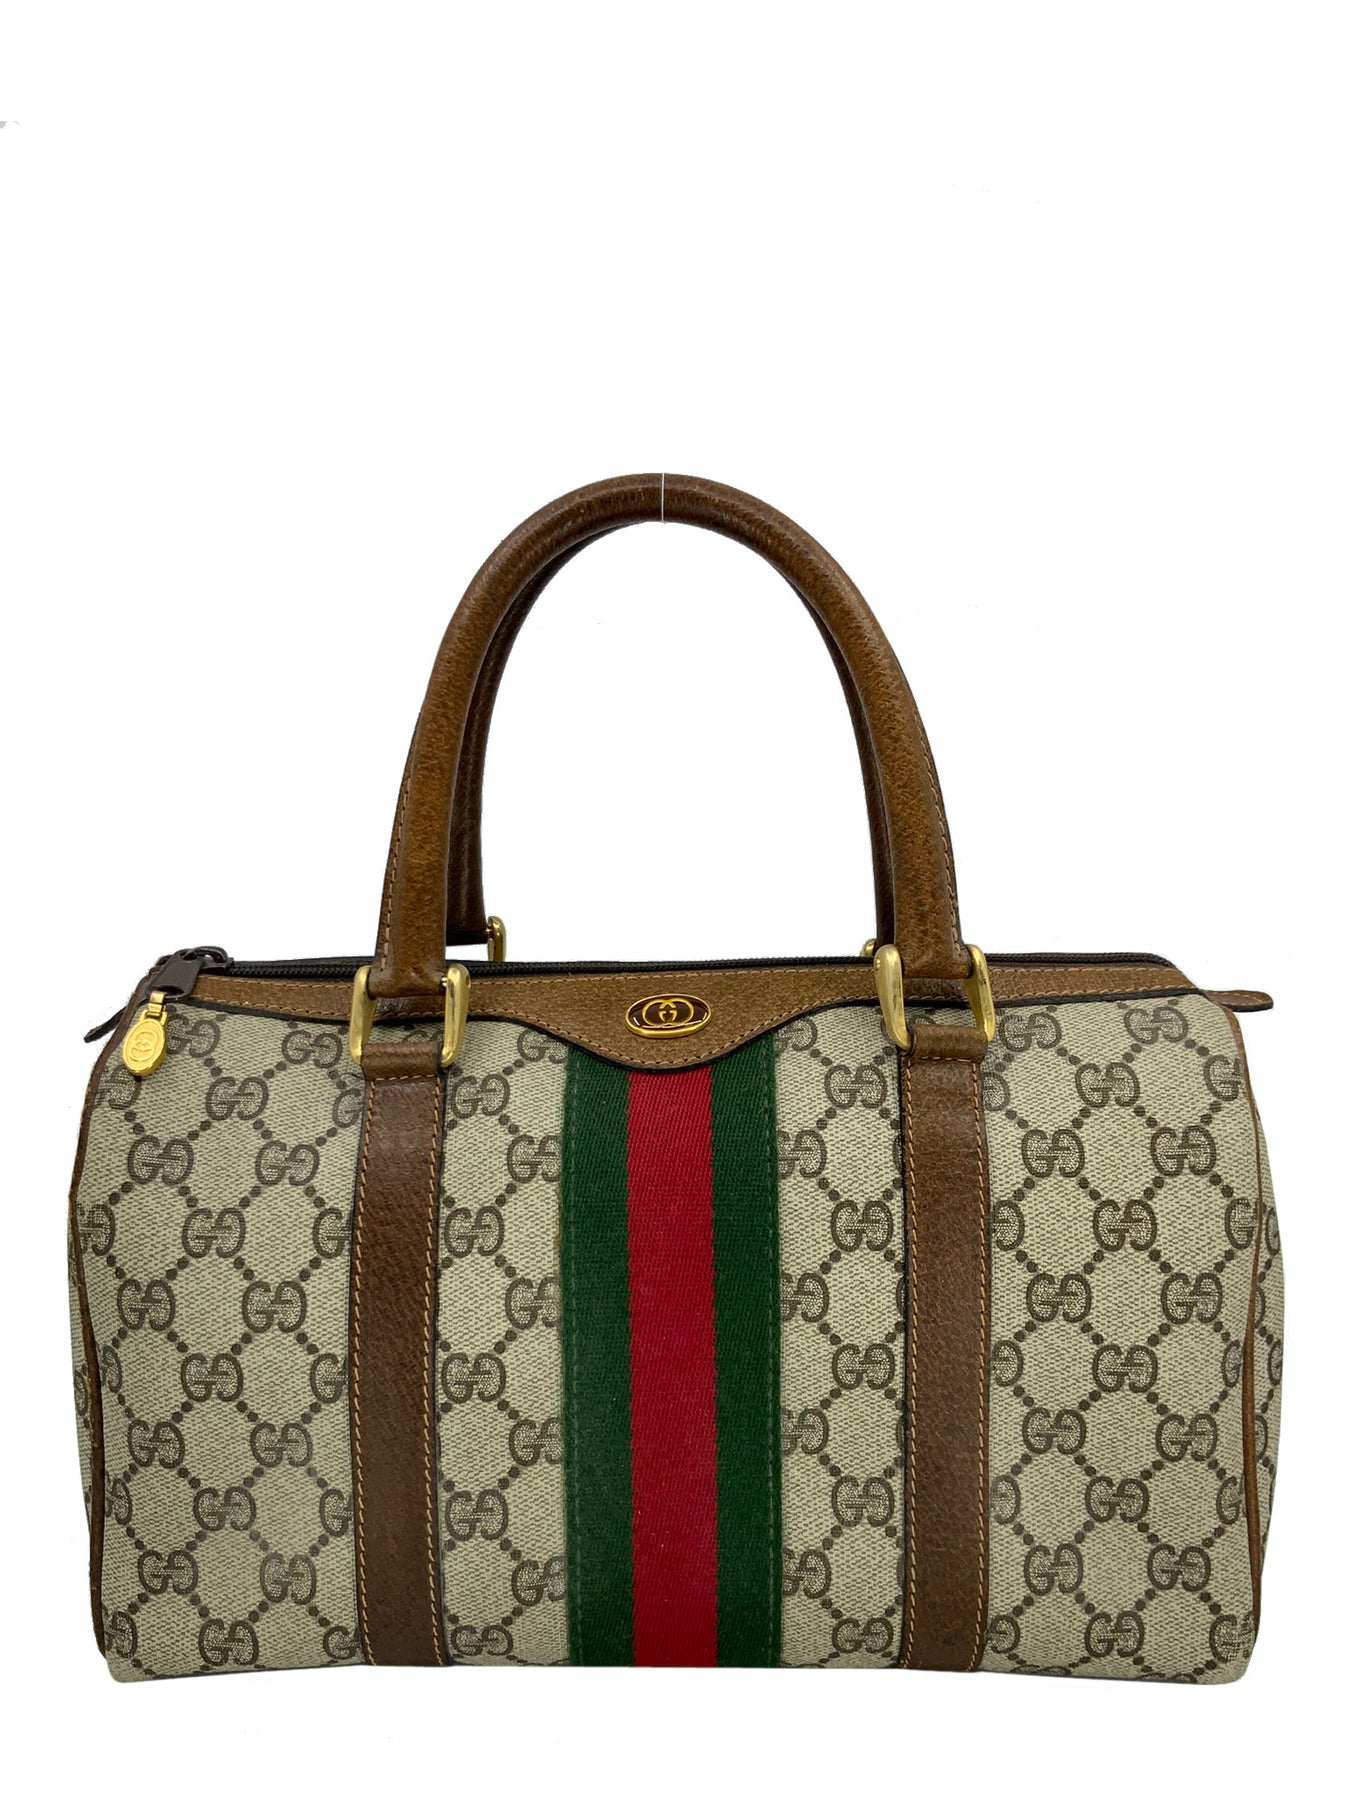 Gucci Drops a Vintage-Style Leather Belt Bag